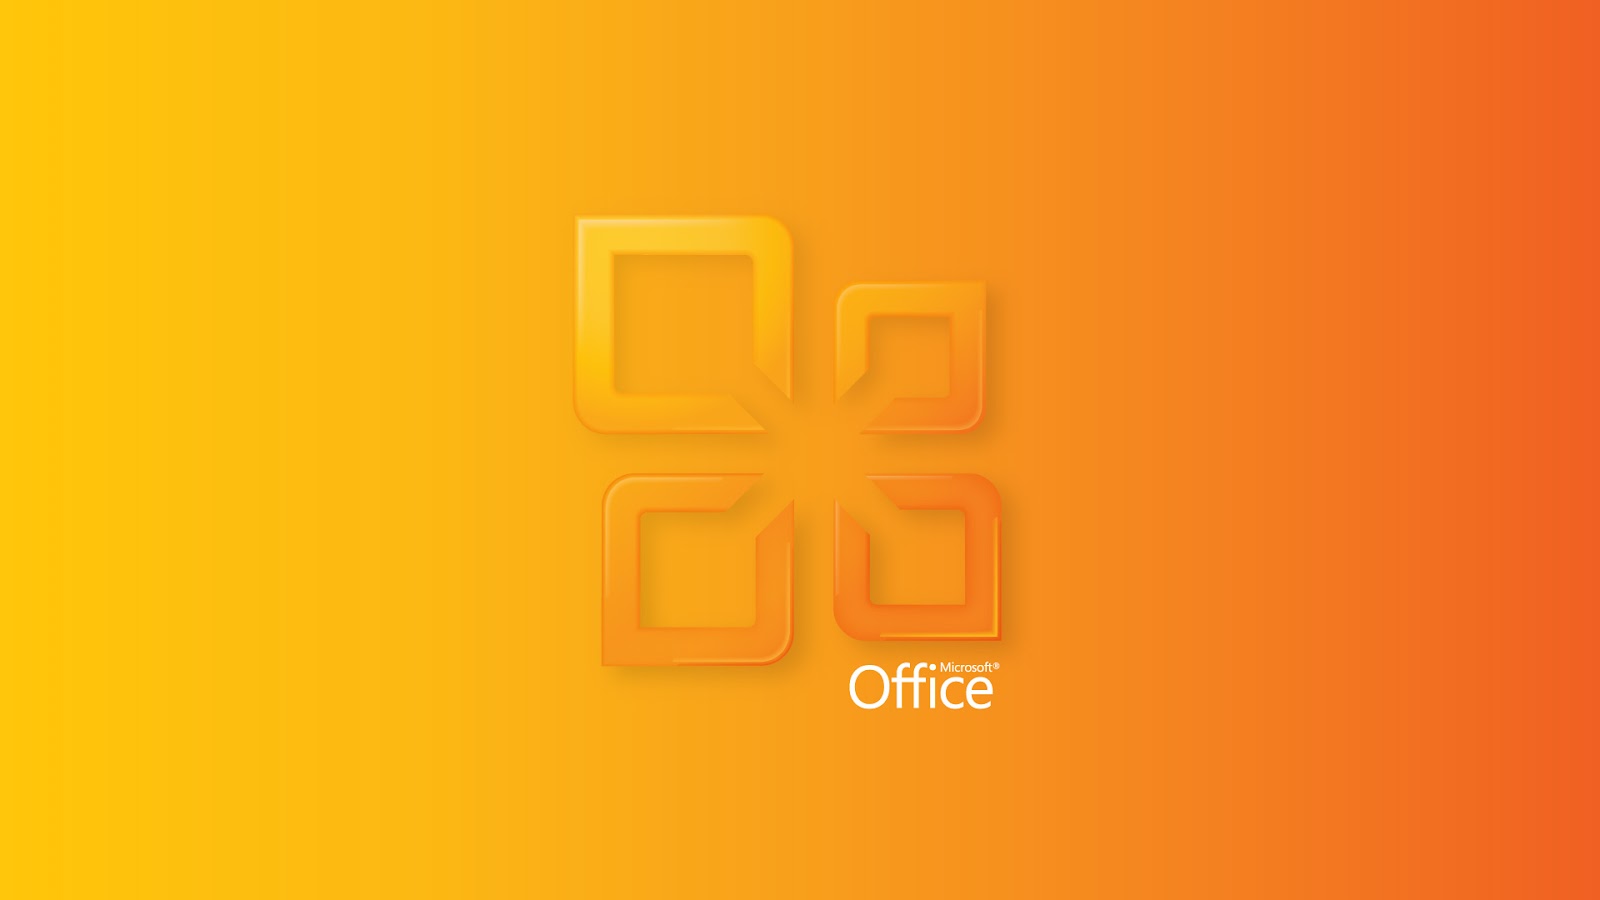 HD Microsoft Office Wallpaper Tam Super